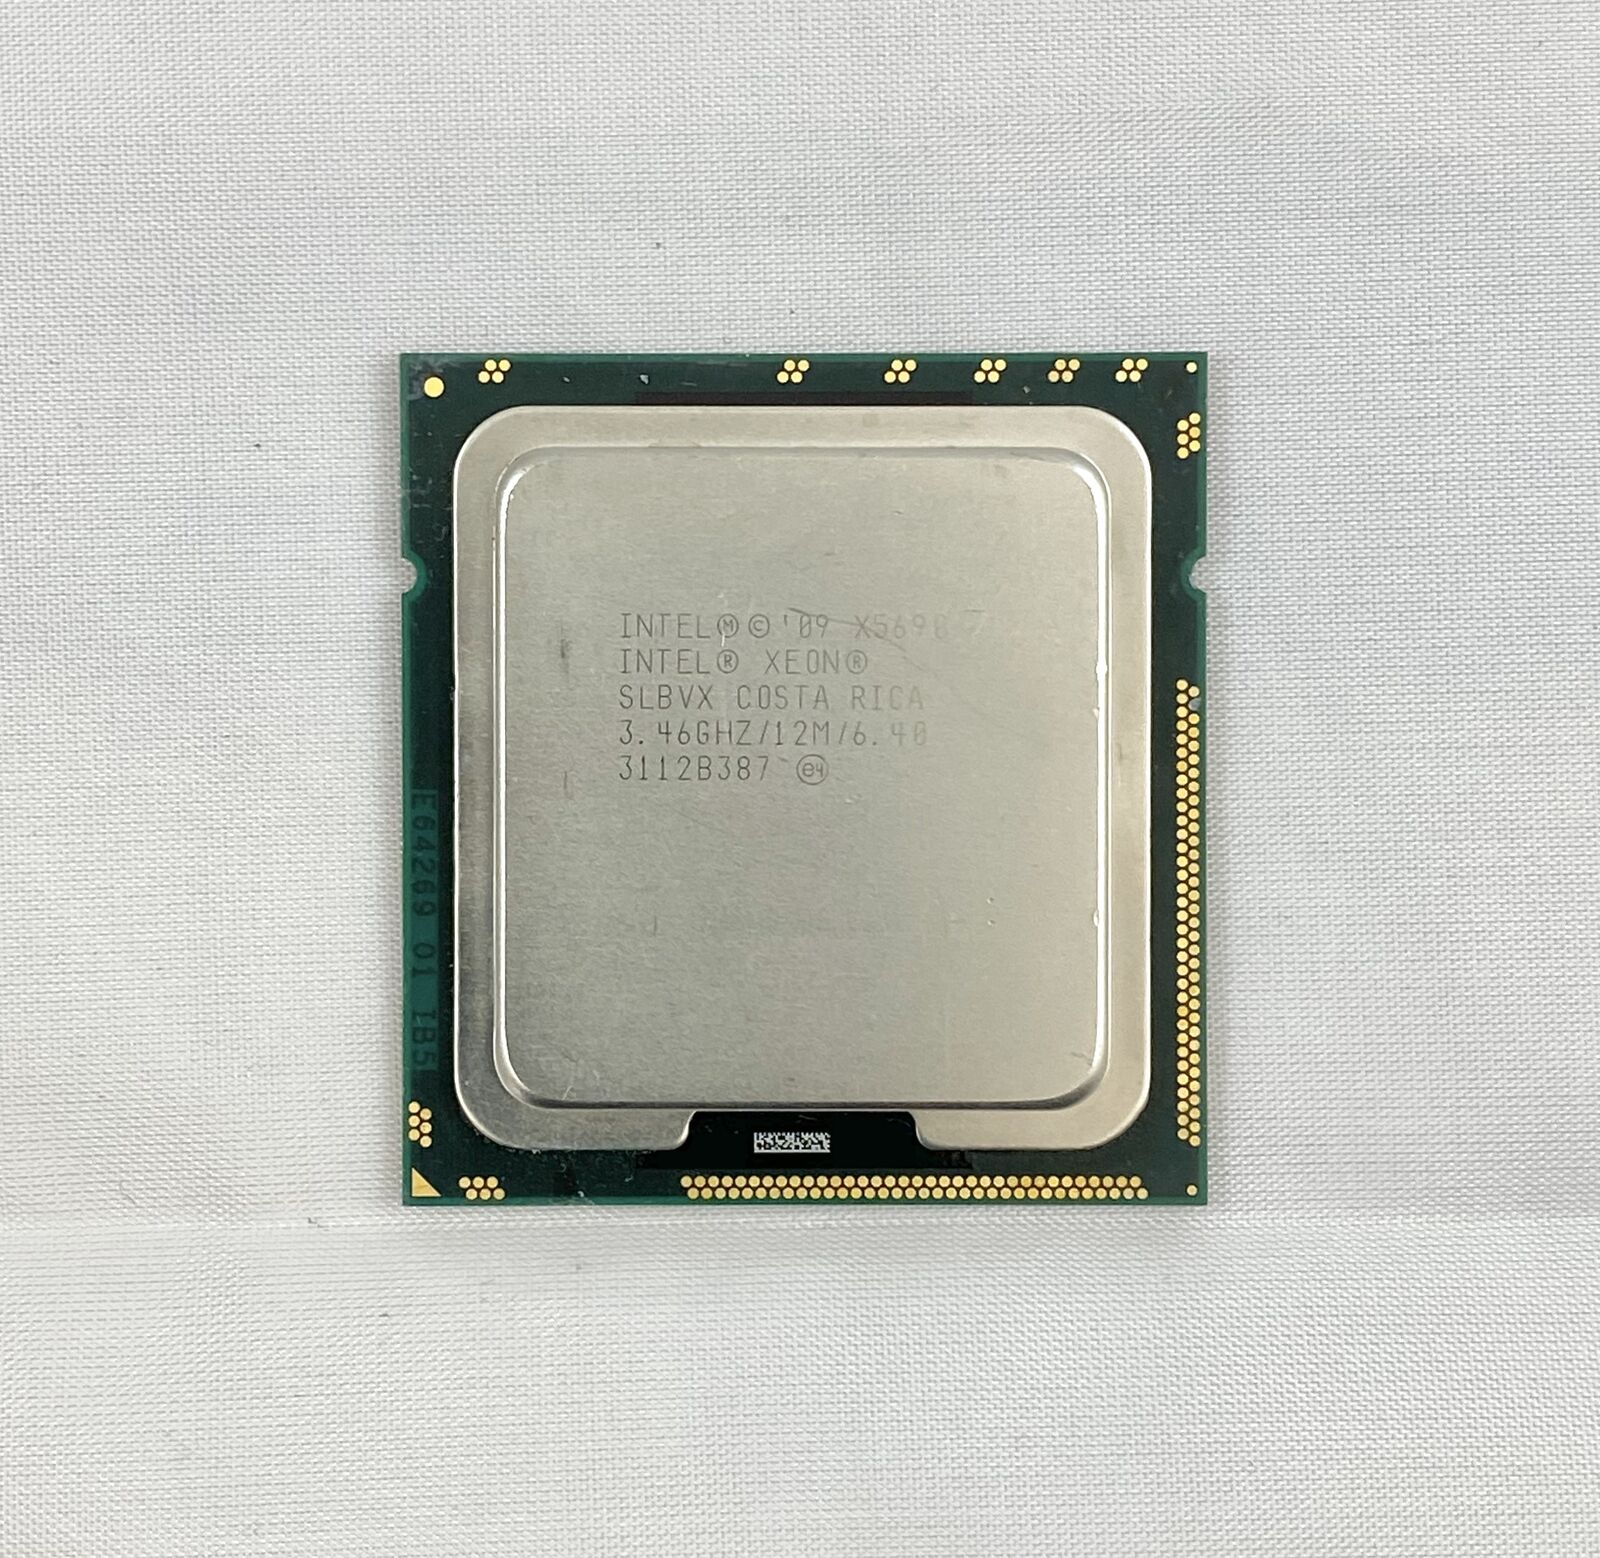 Intel Xeon X5690 Six Core 3.46GHz LGA1366 SLBVX Grade B CPU Processor